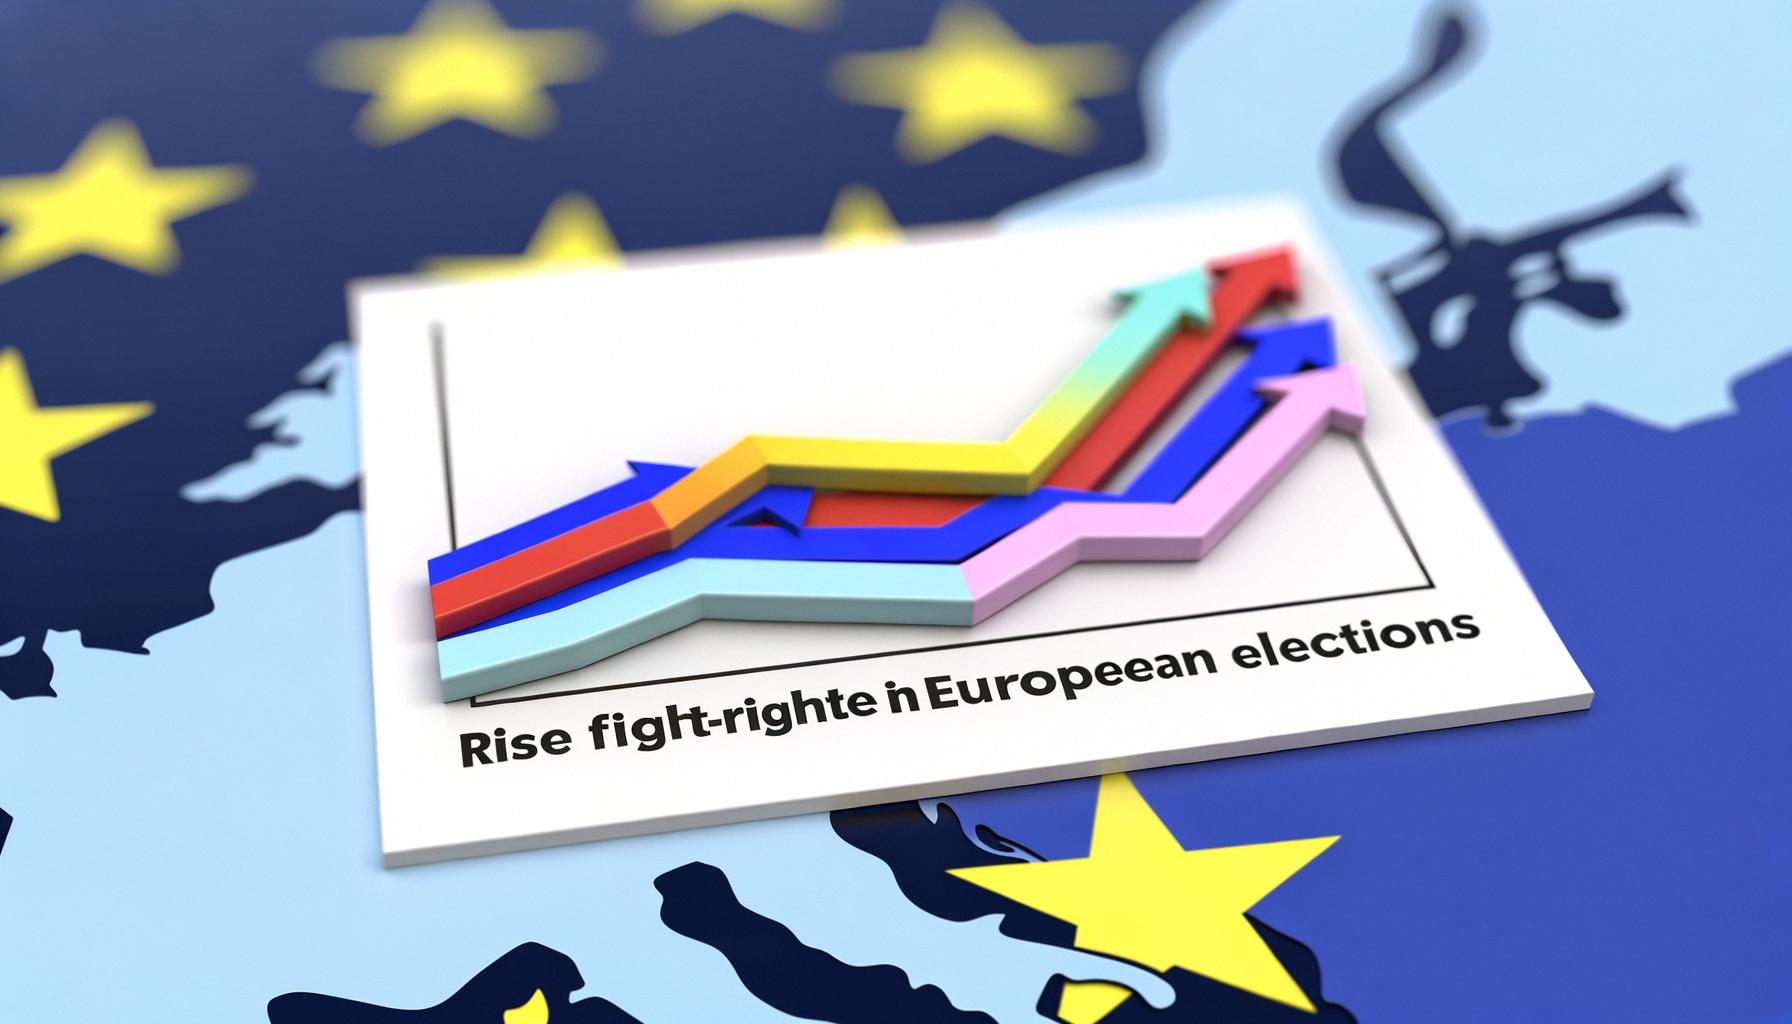 European elections show rising far-right influence Balanced News